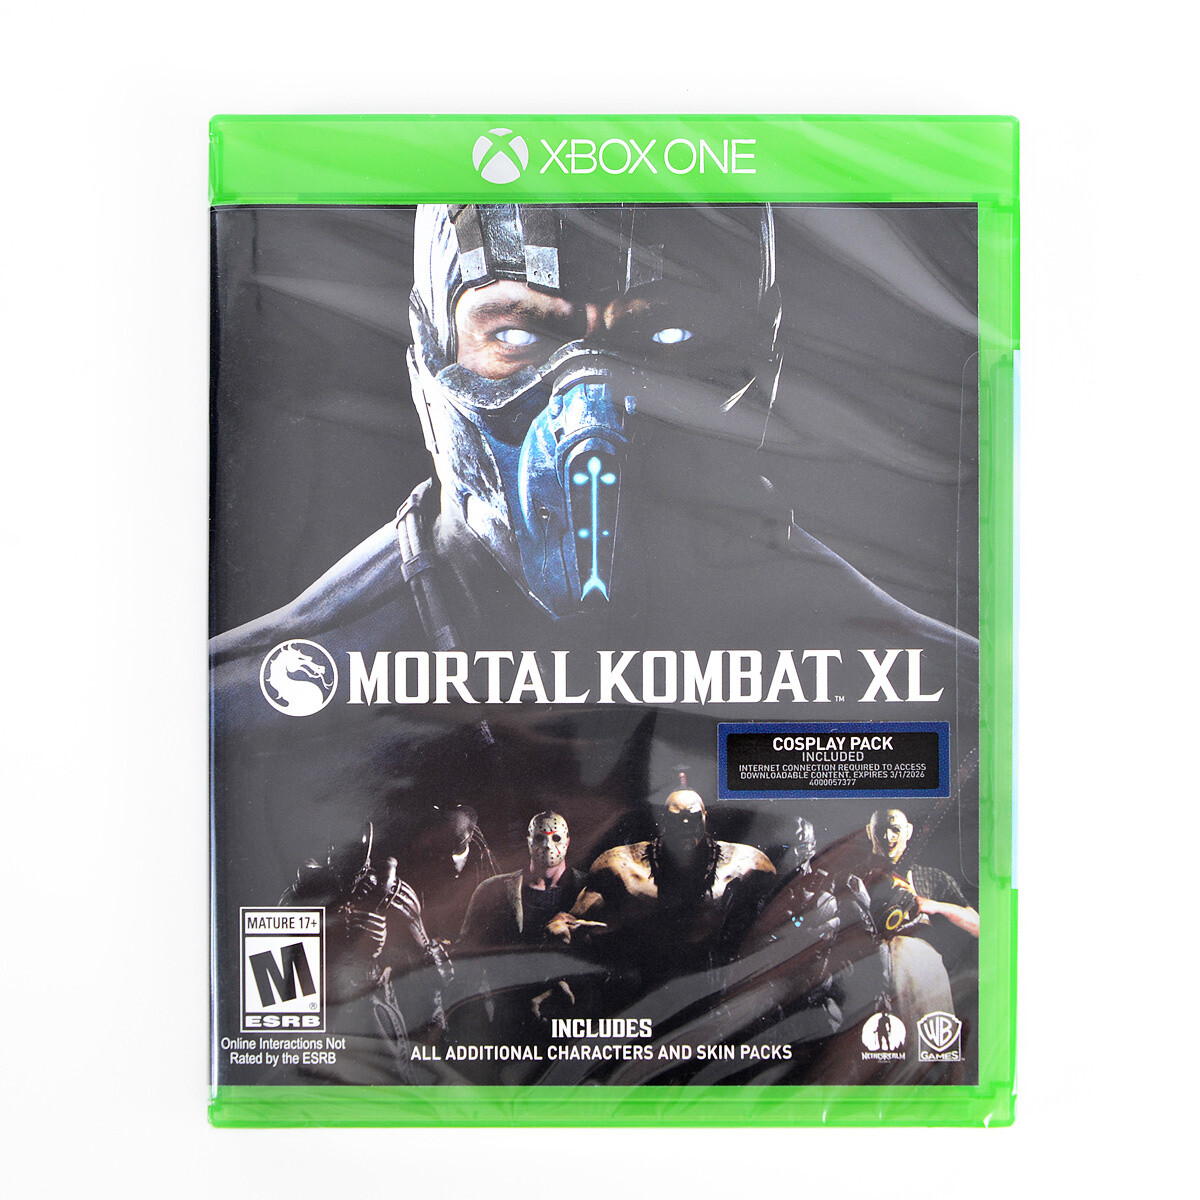 Mortal Kombat X Apocalypse Pack